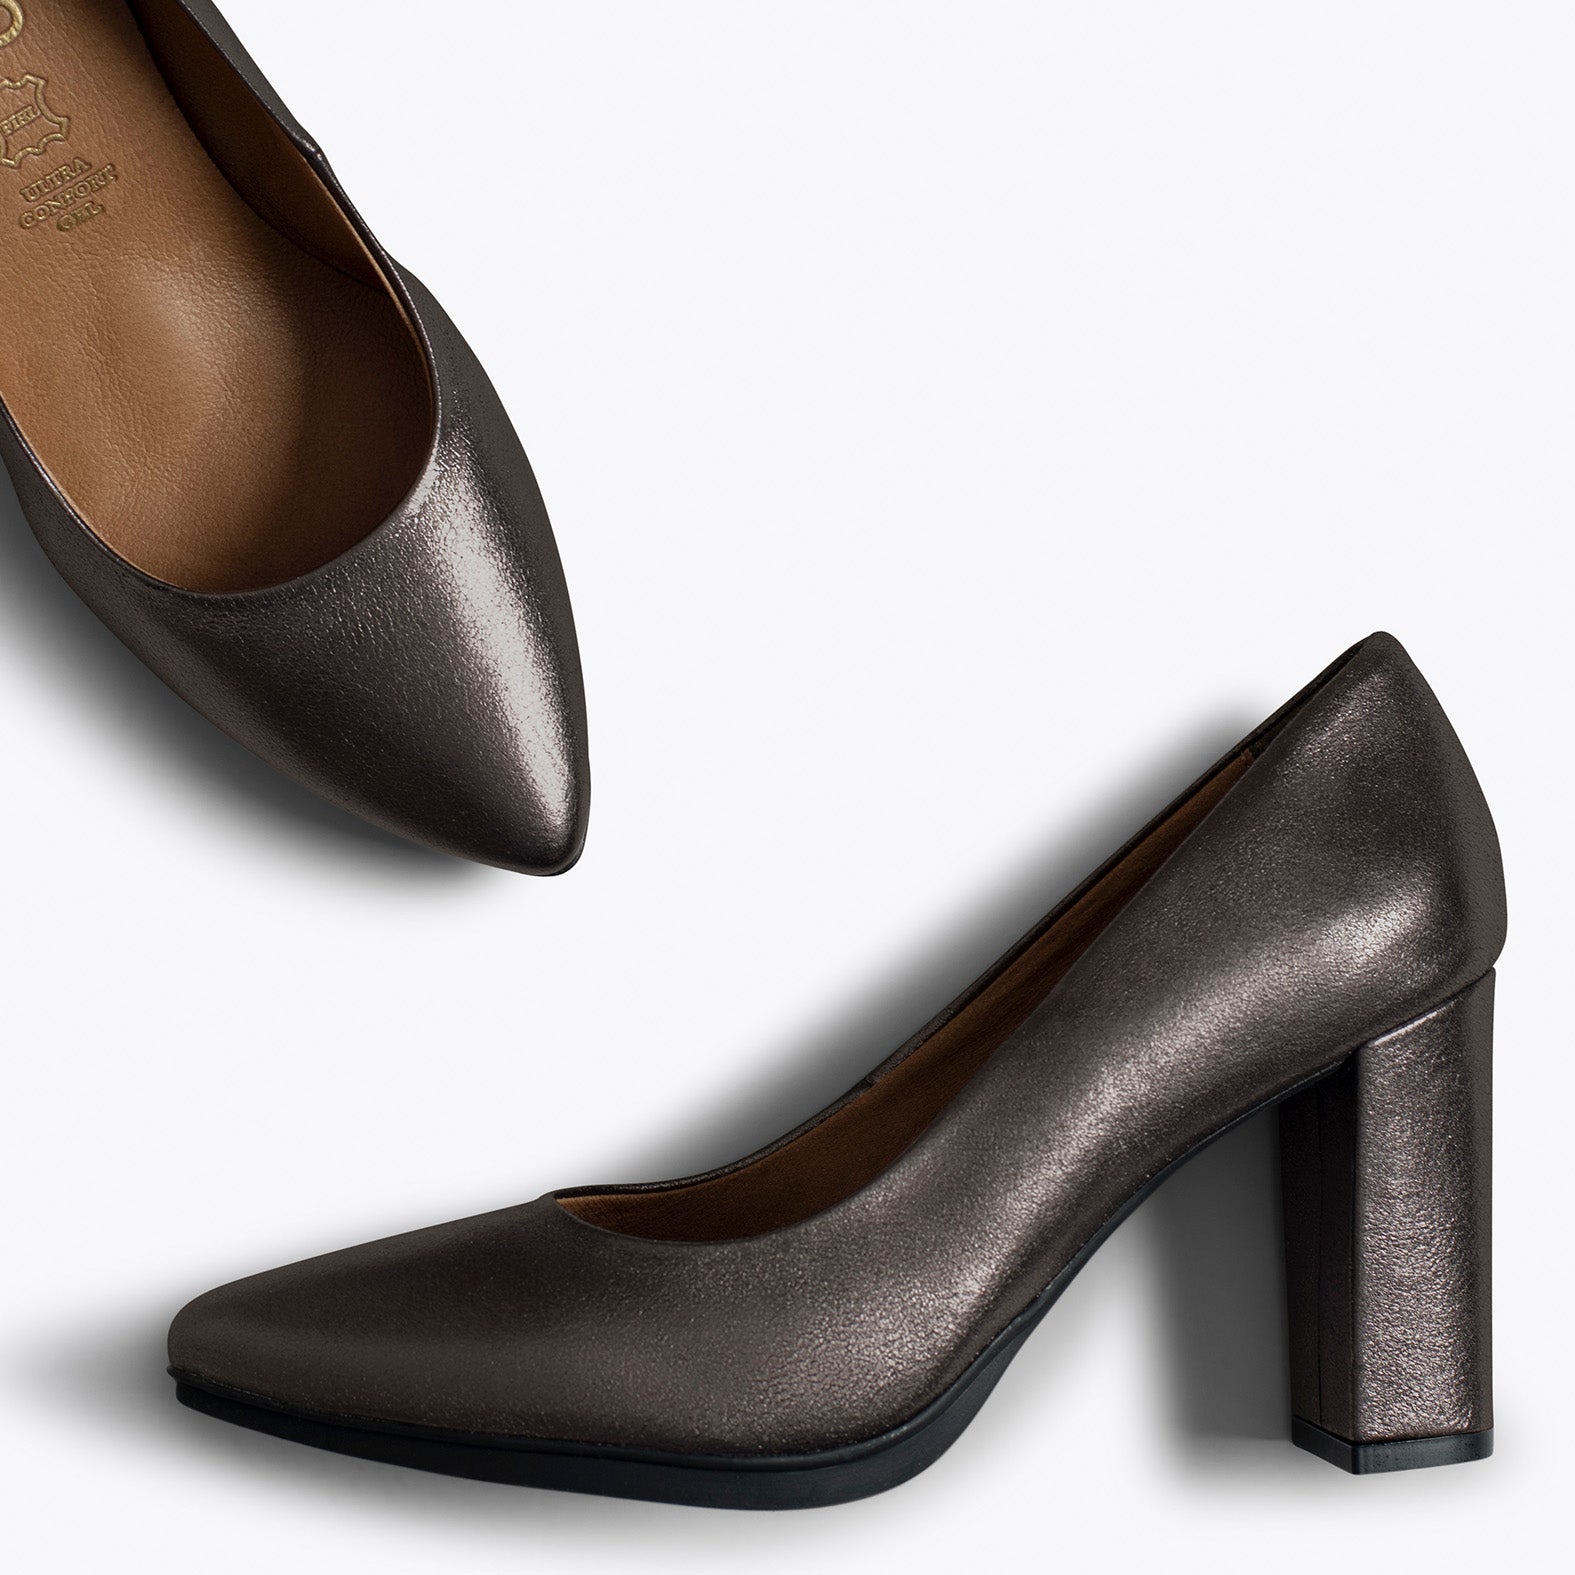 URBAN SPLASH – SILVER metallic leather high heel